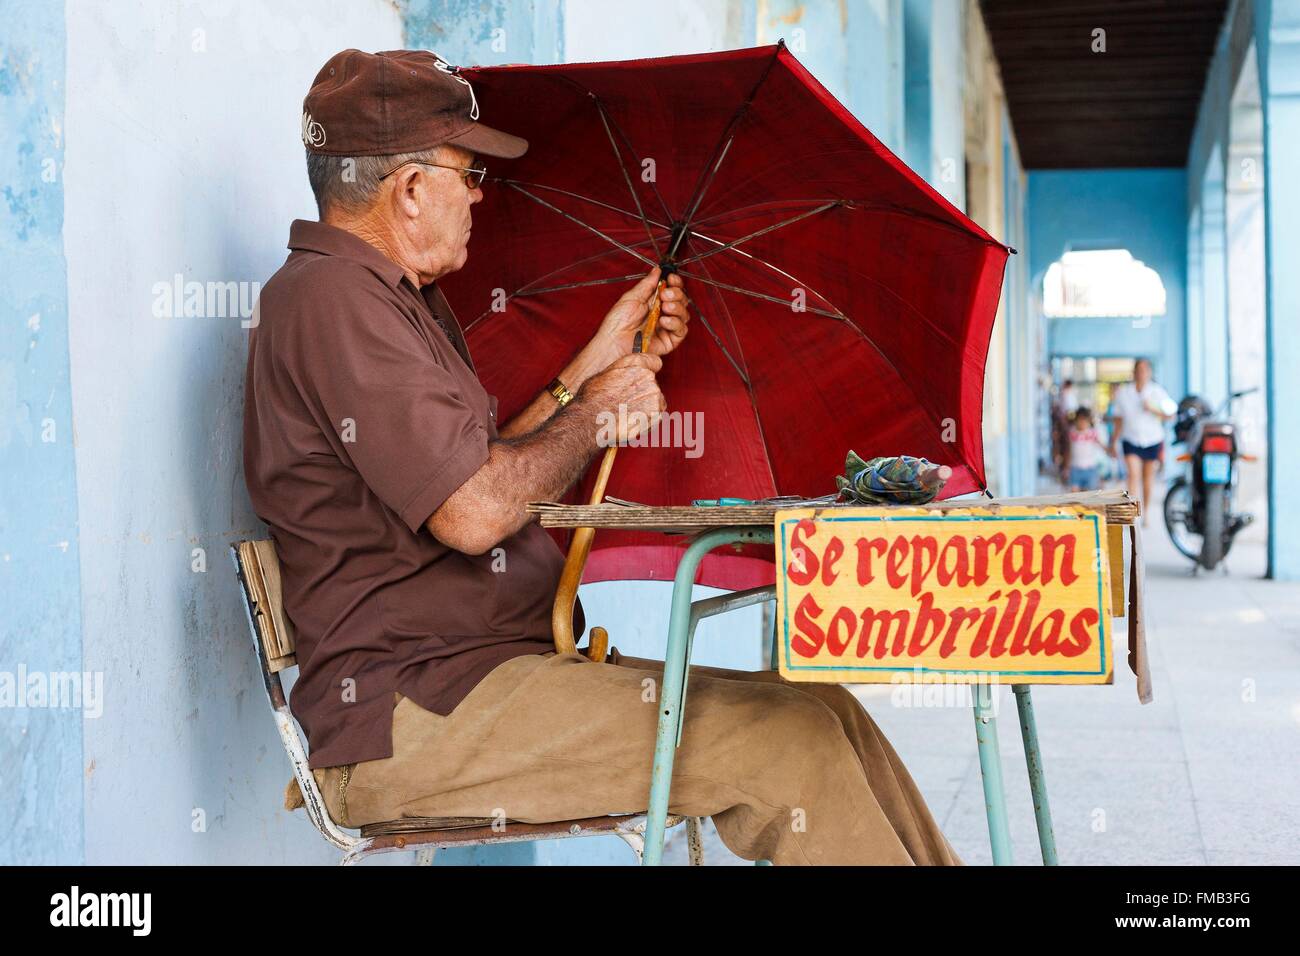 Cuba, Las Tunas, Repairer of umbrellas Stock Photo